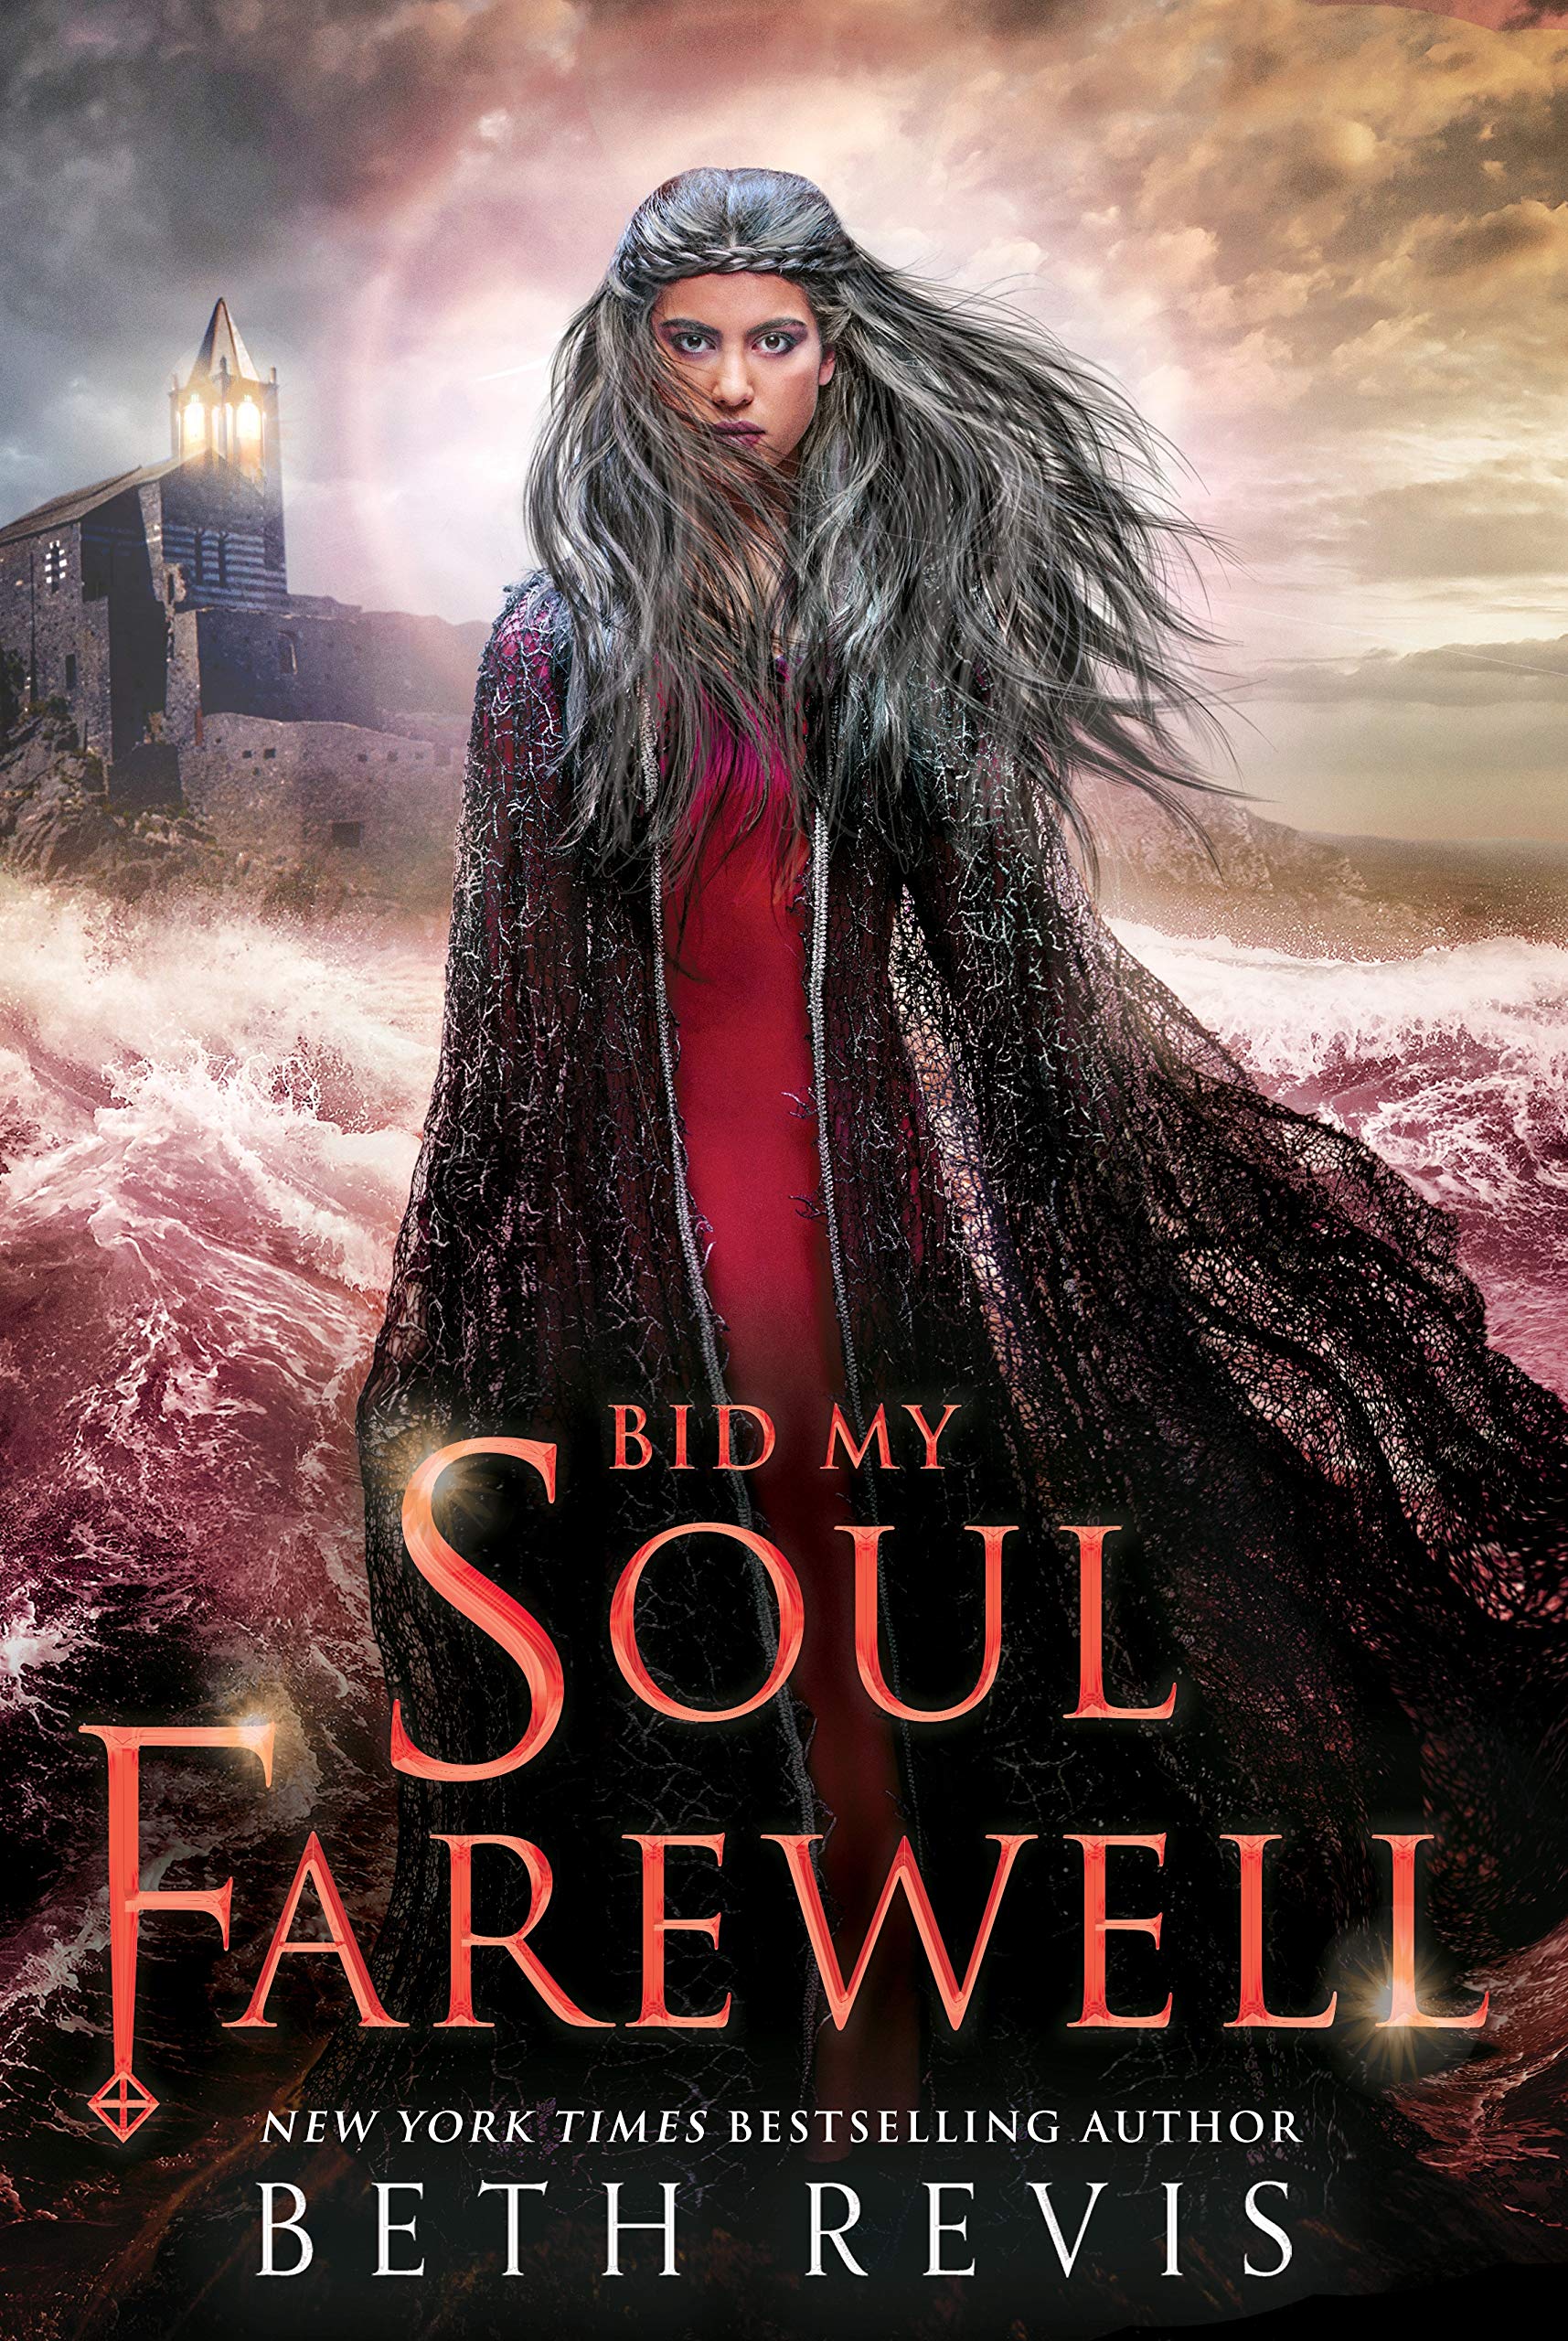 Bid My Soul Farewell | Beth Revis image2